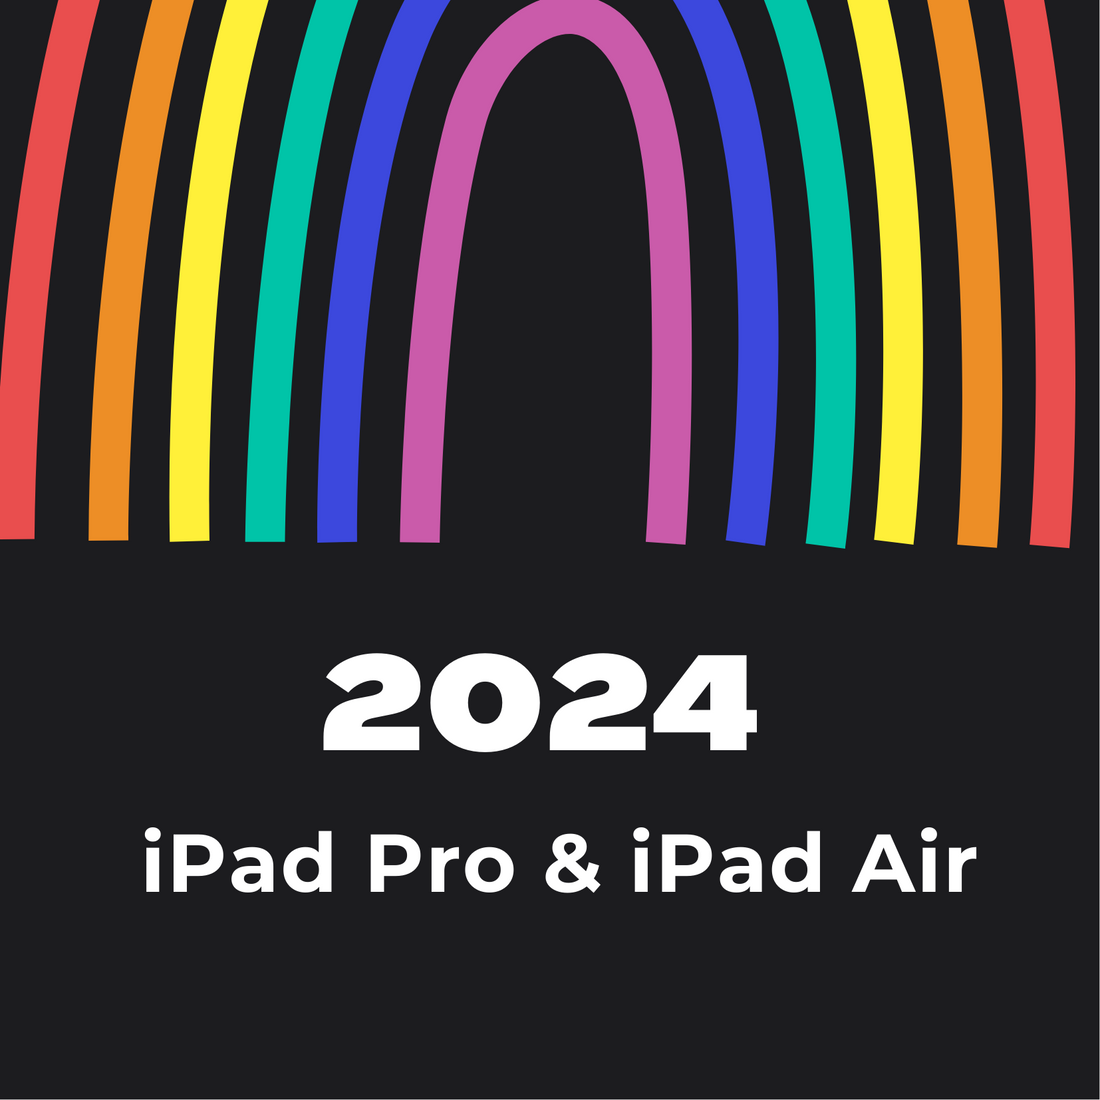 Apple New iPad 2024 Launch – New Date Rumored